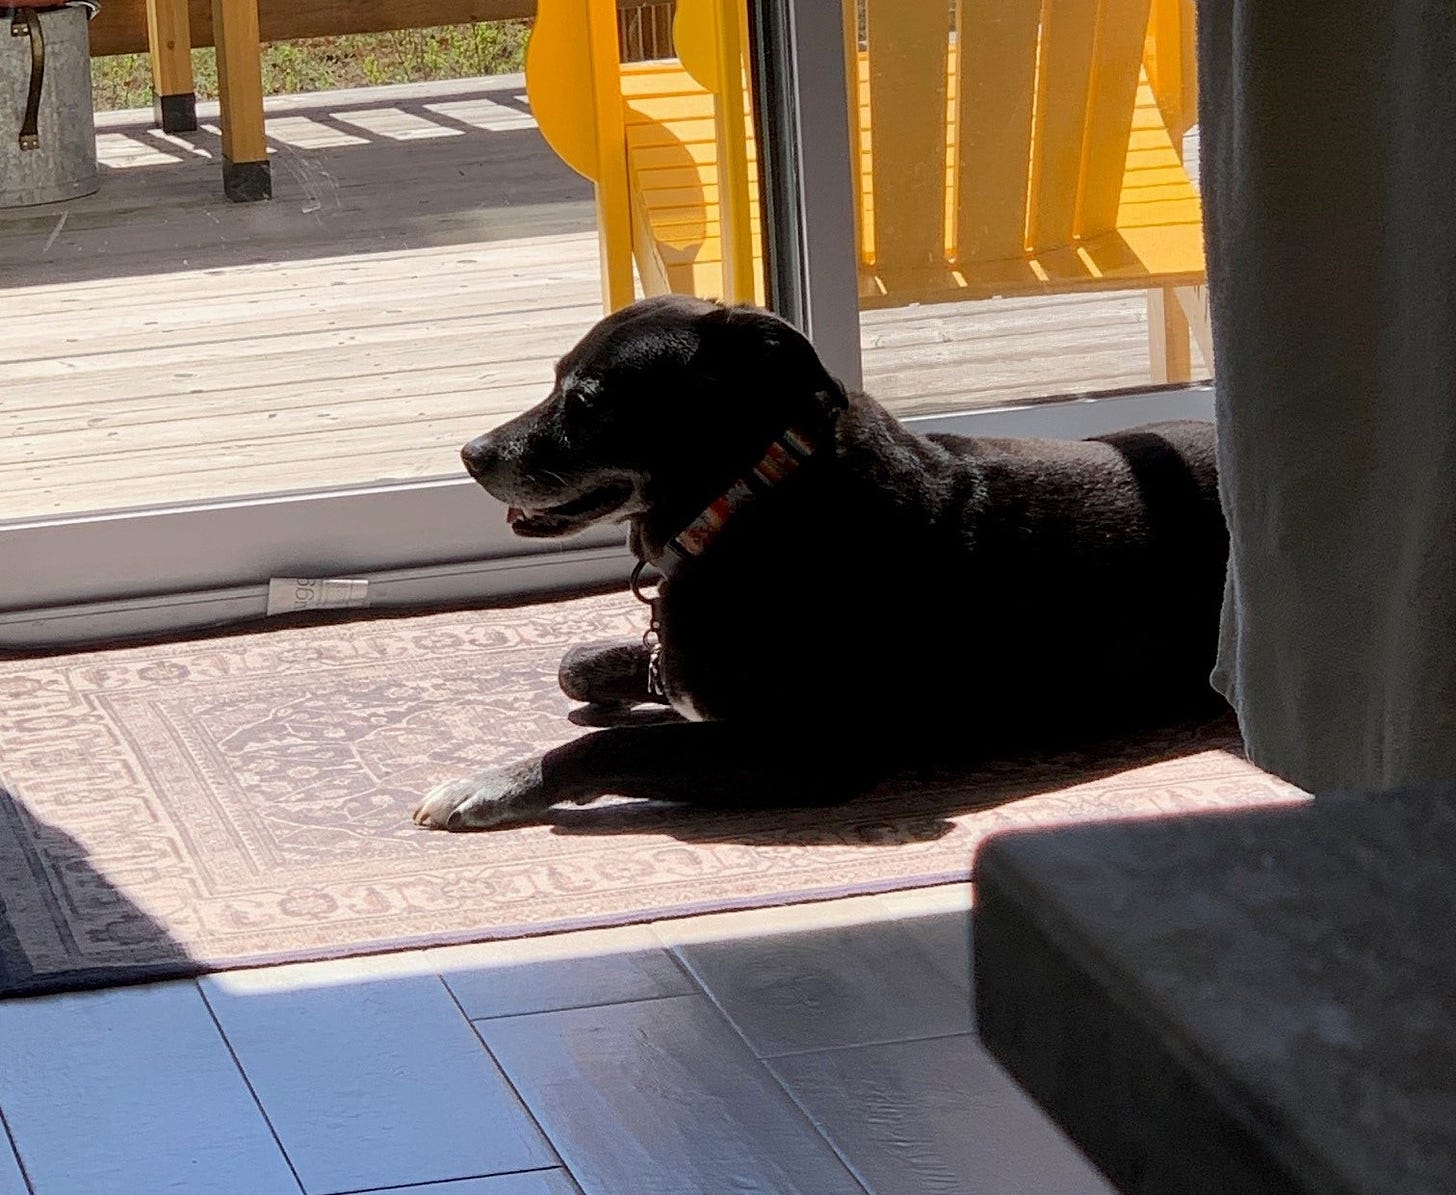 Black dog on rug, sun shining through window